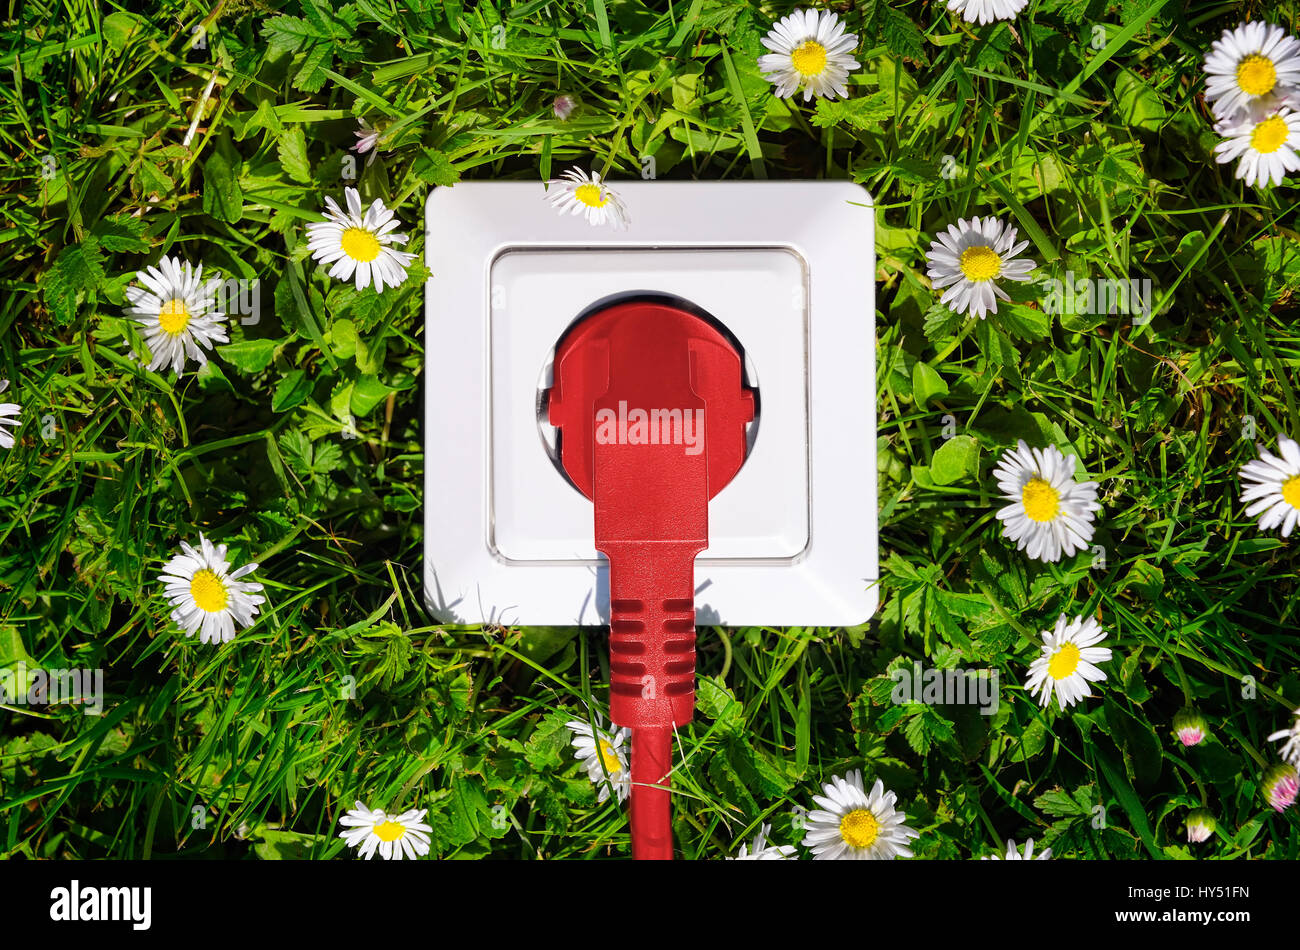 Outlet with red plug on lawn, ecological stream and stream costs, Steckdose mit rotem Stecker auf Rasen, oekostrom und Stromkosten Stock Photo